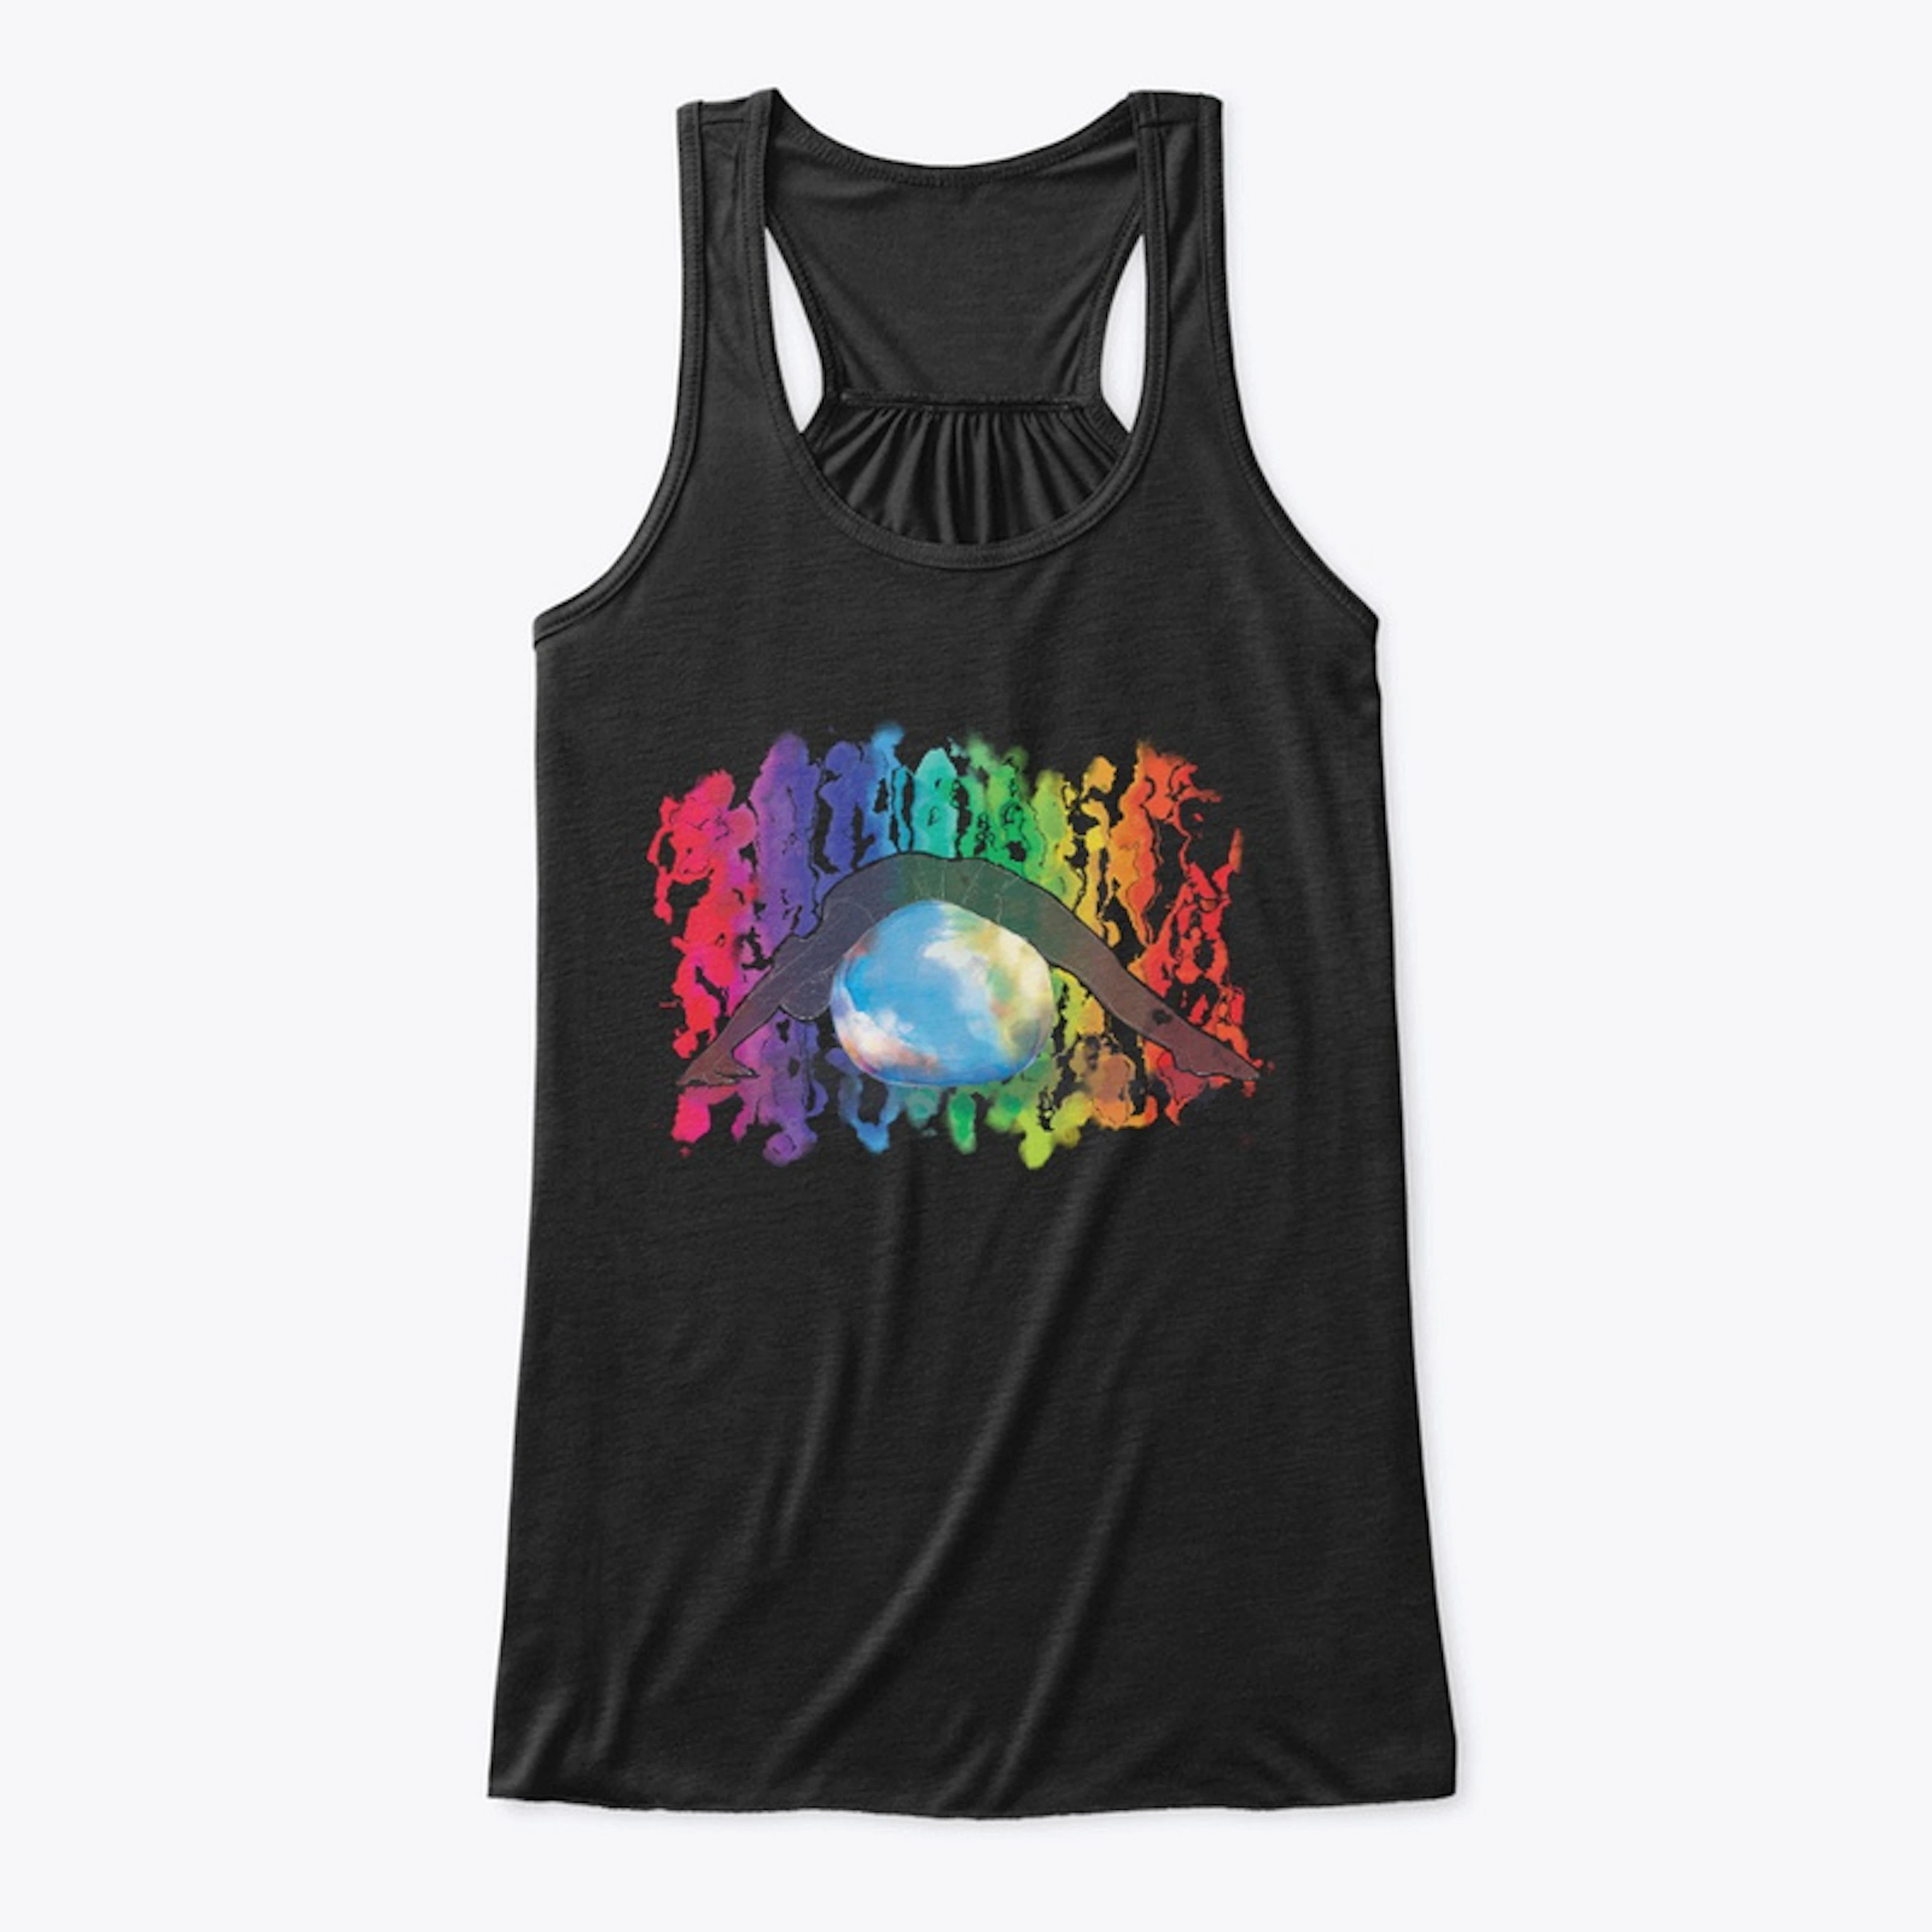 Rainbows and woman on Pilates Earth Ball